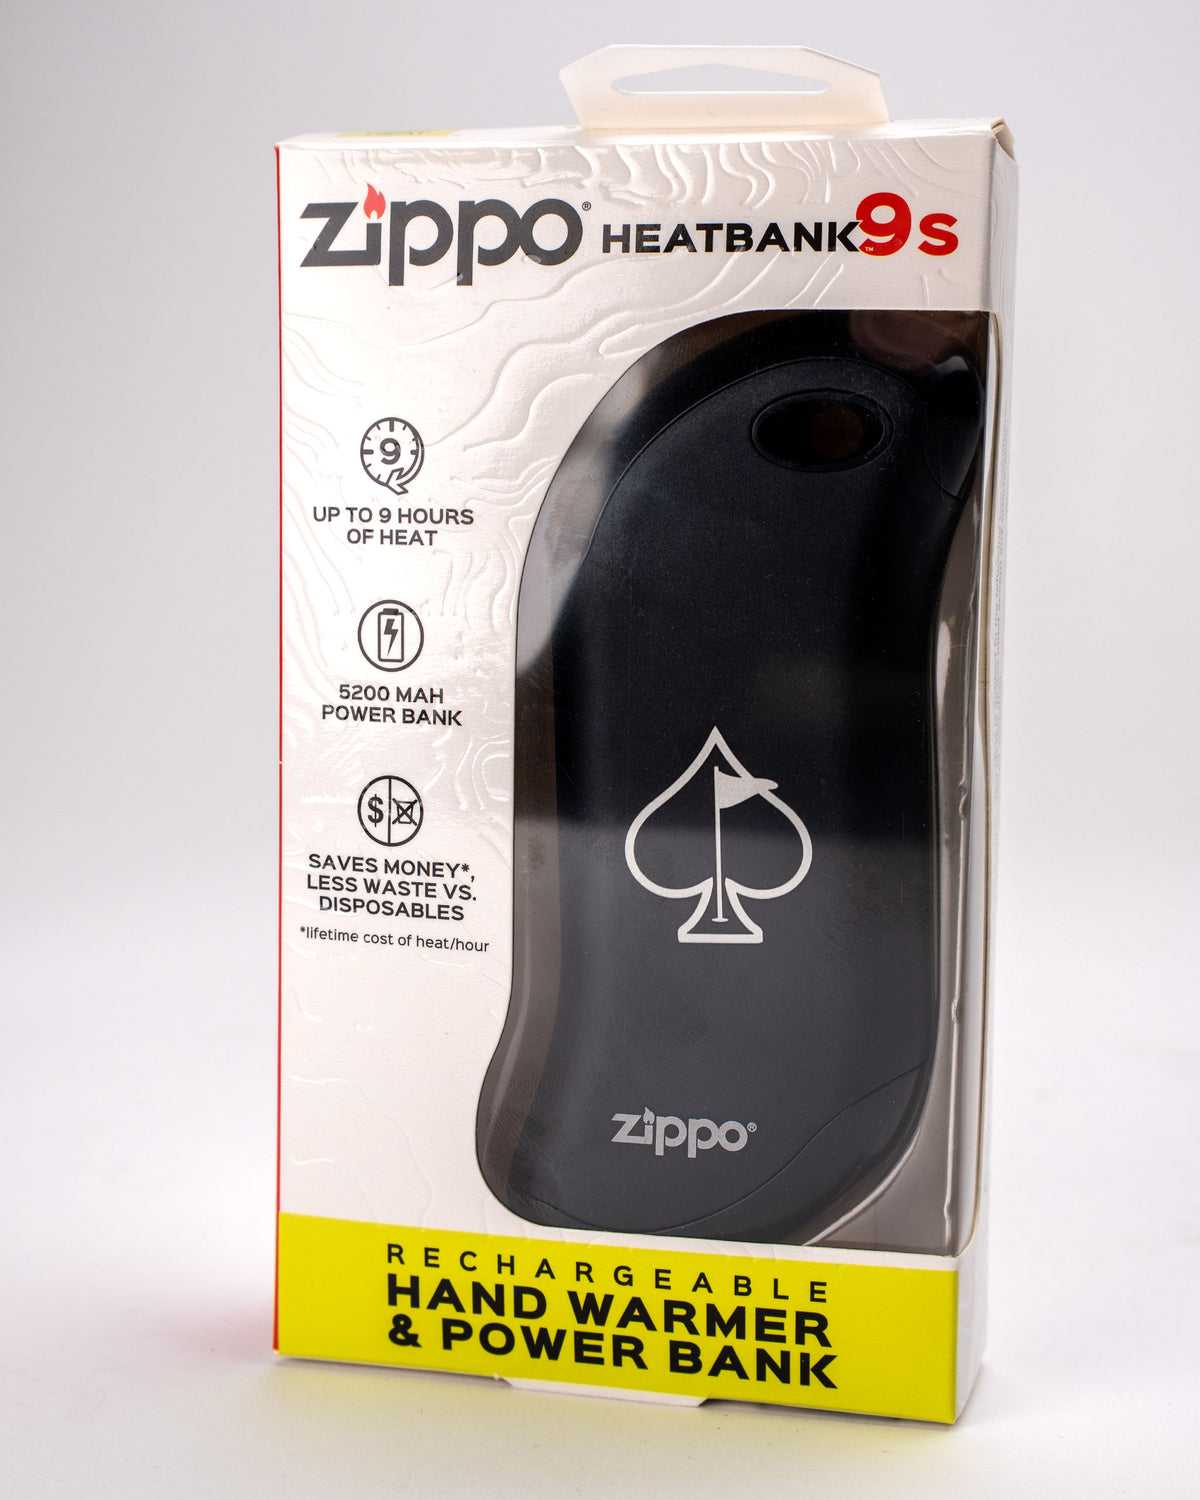 Zippo Heatbank 9s